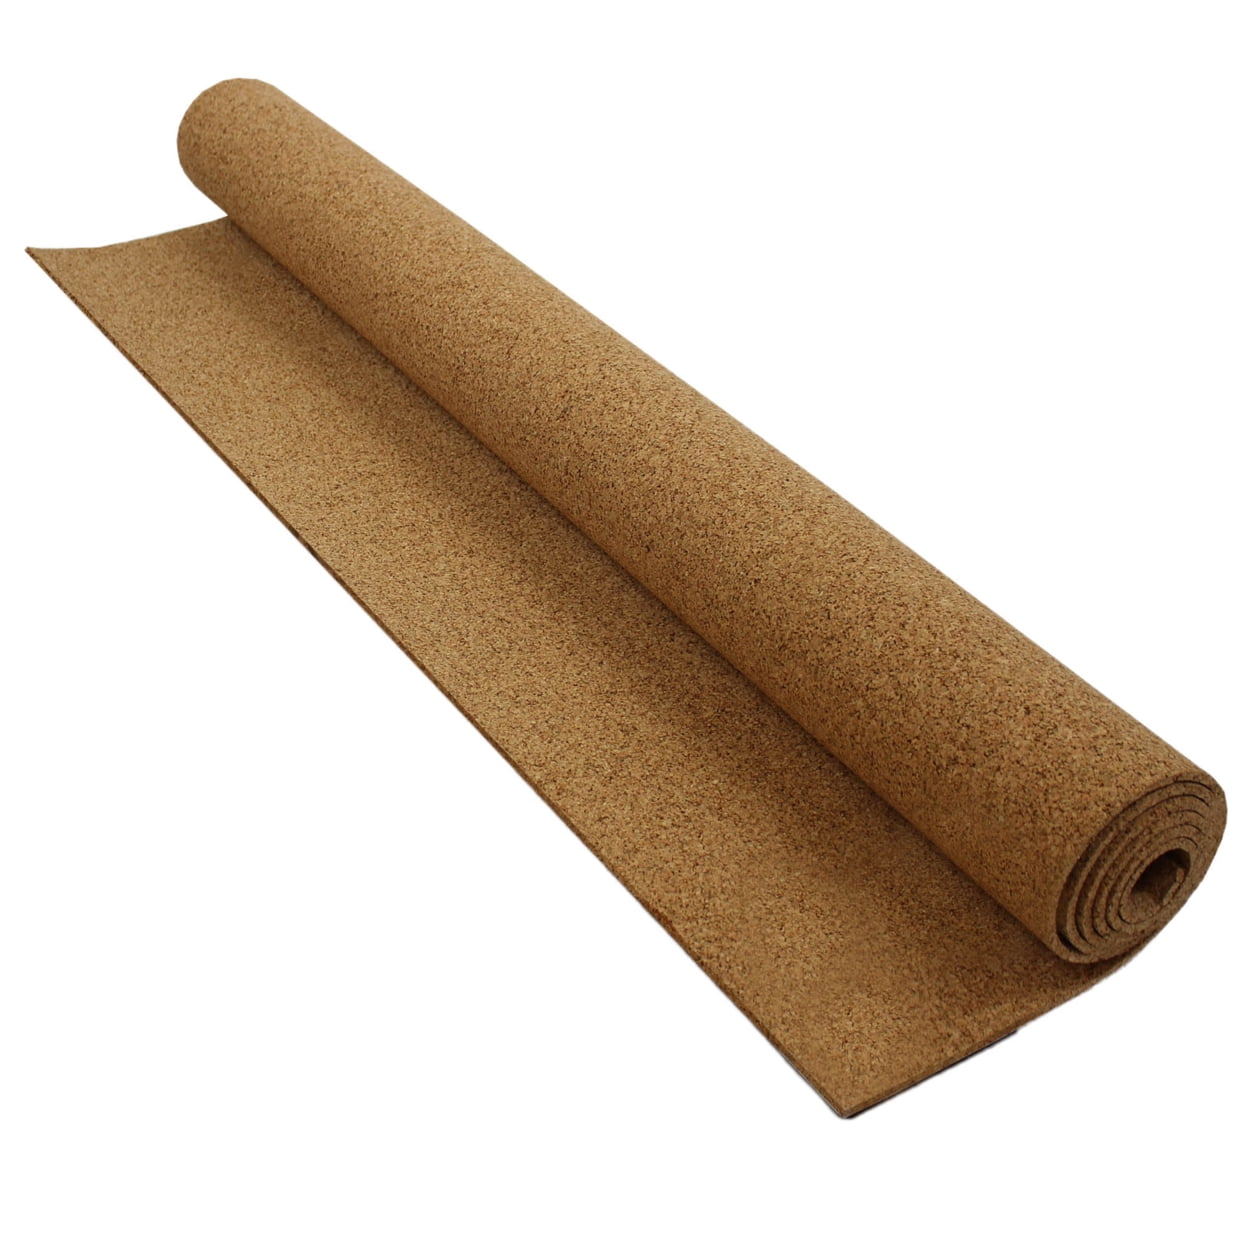  3mm Self-Adhesive Cork Board Roll, 1/8 Thick Cork